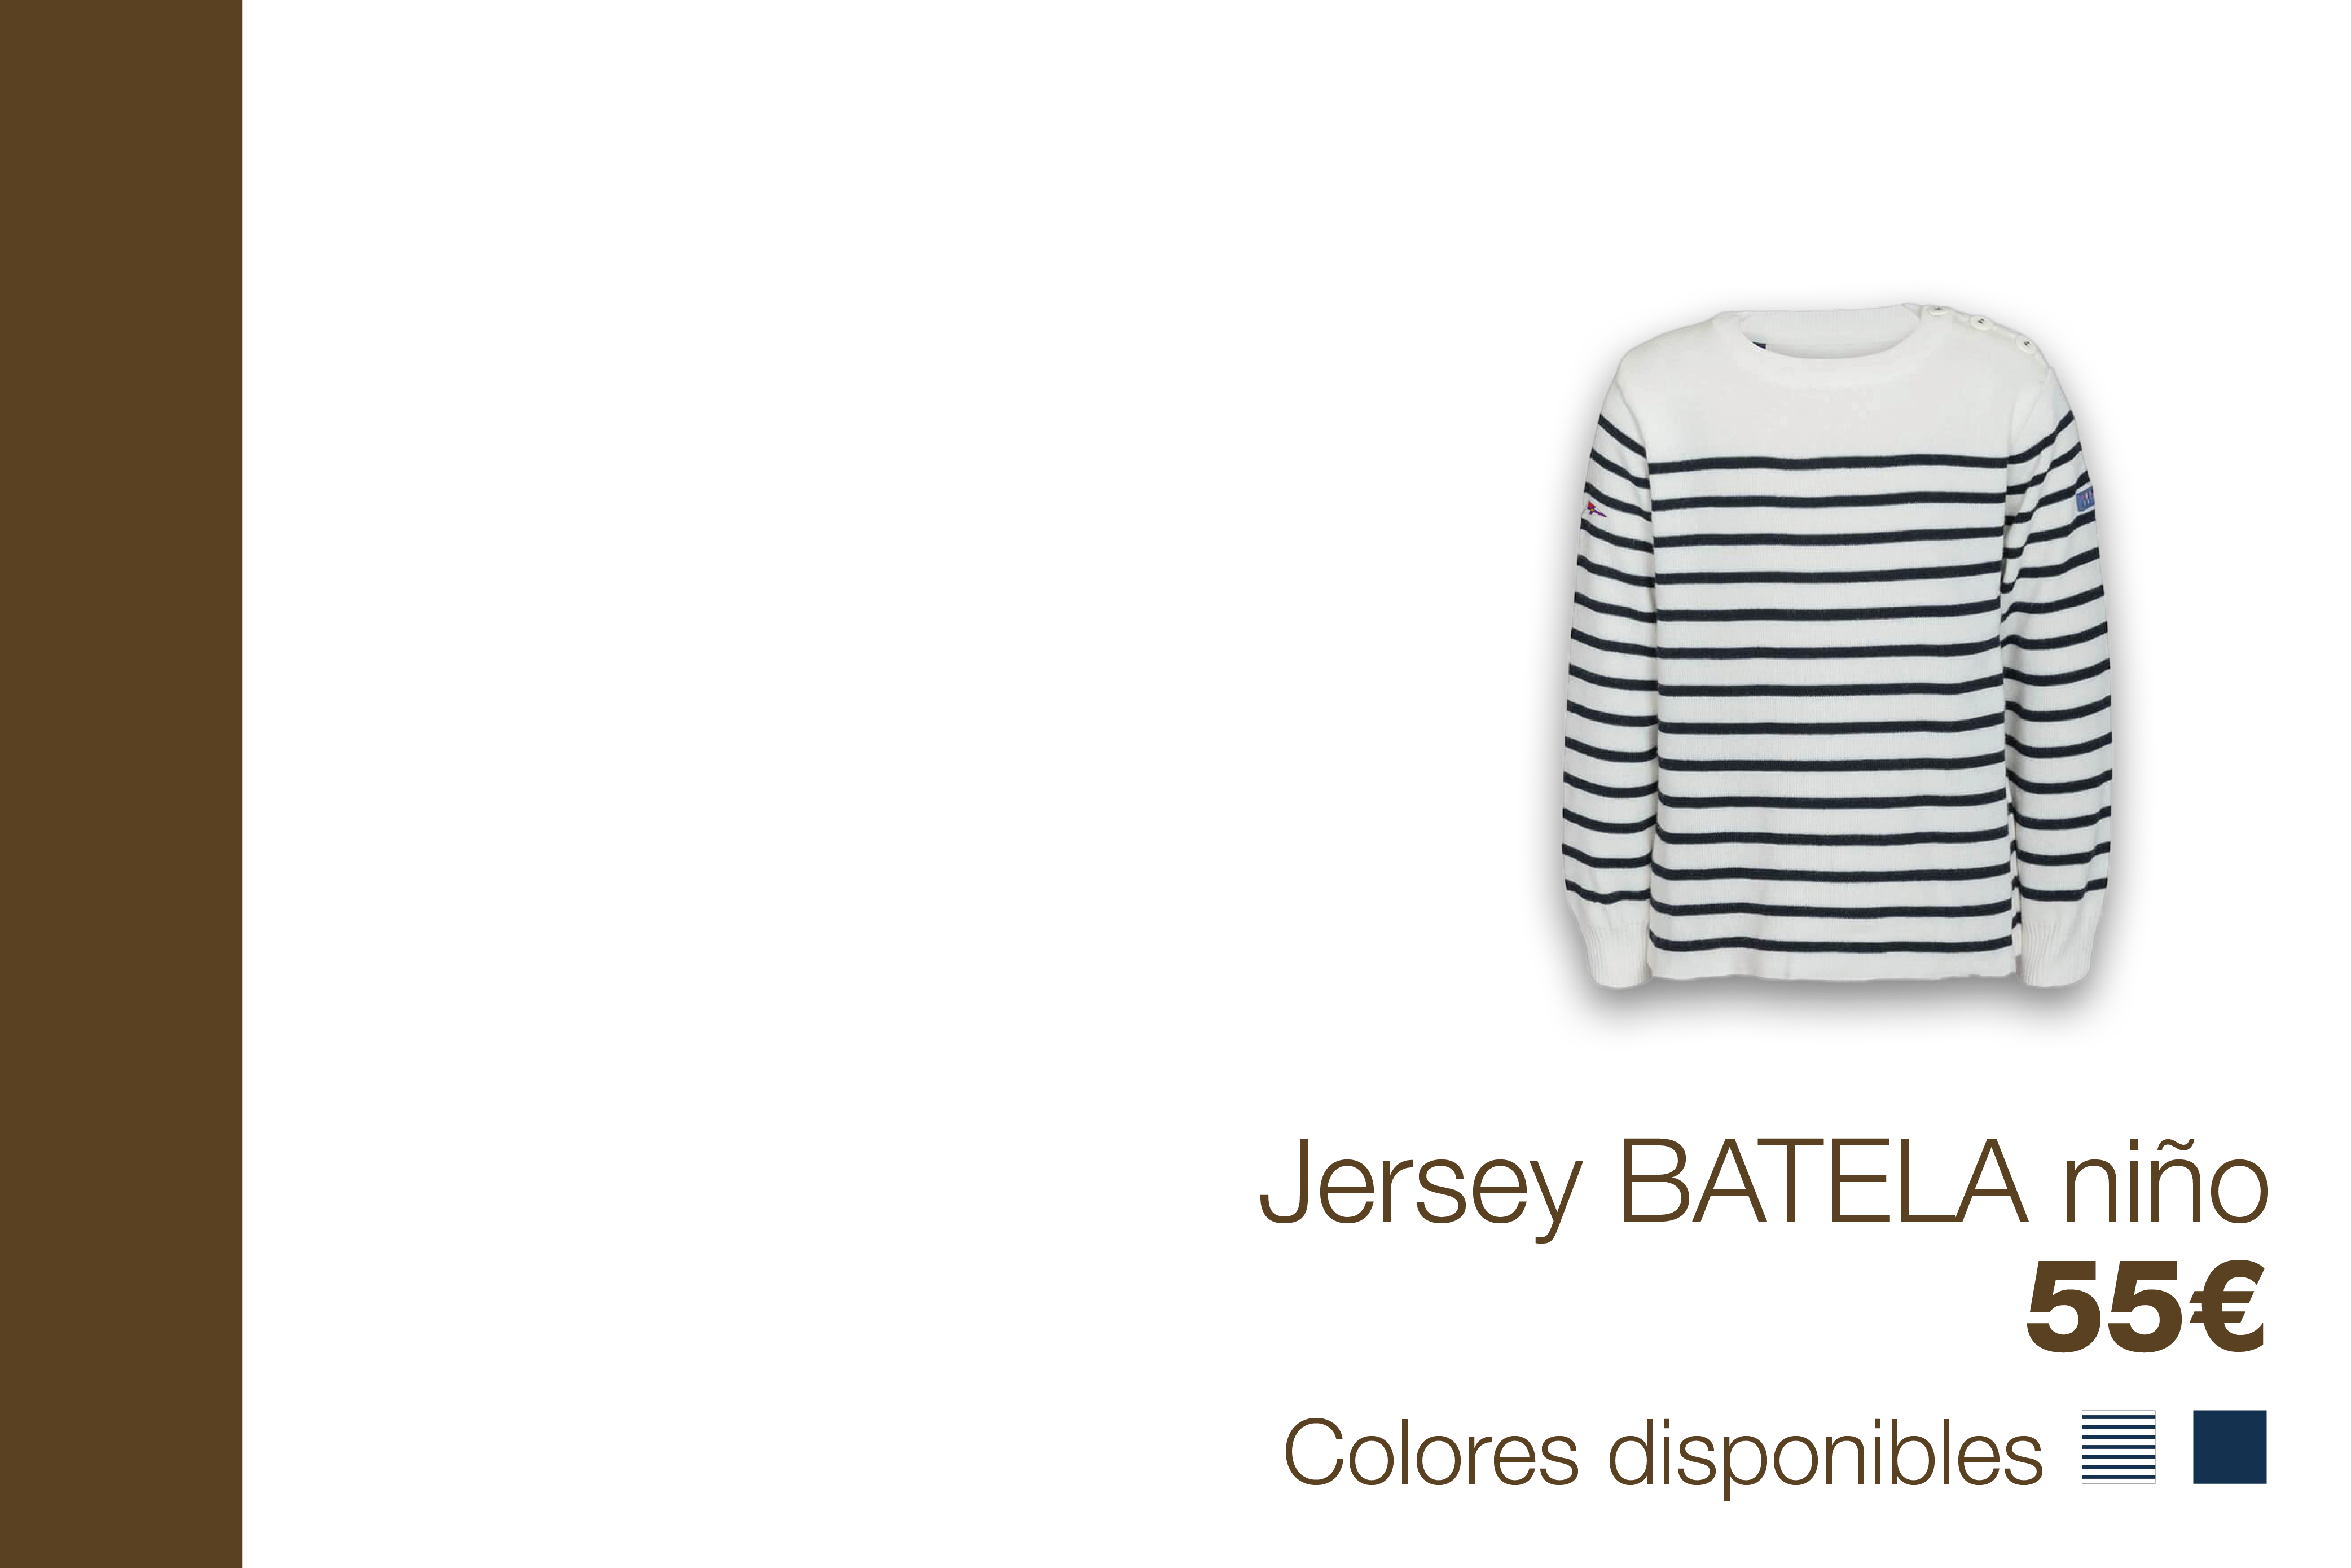 Jersey BATELA nio - 55